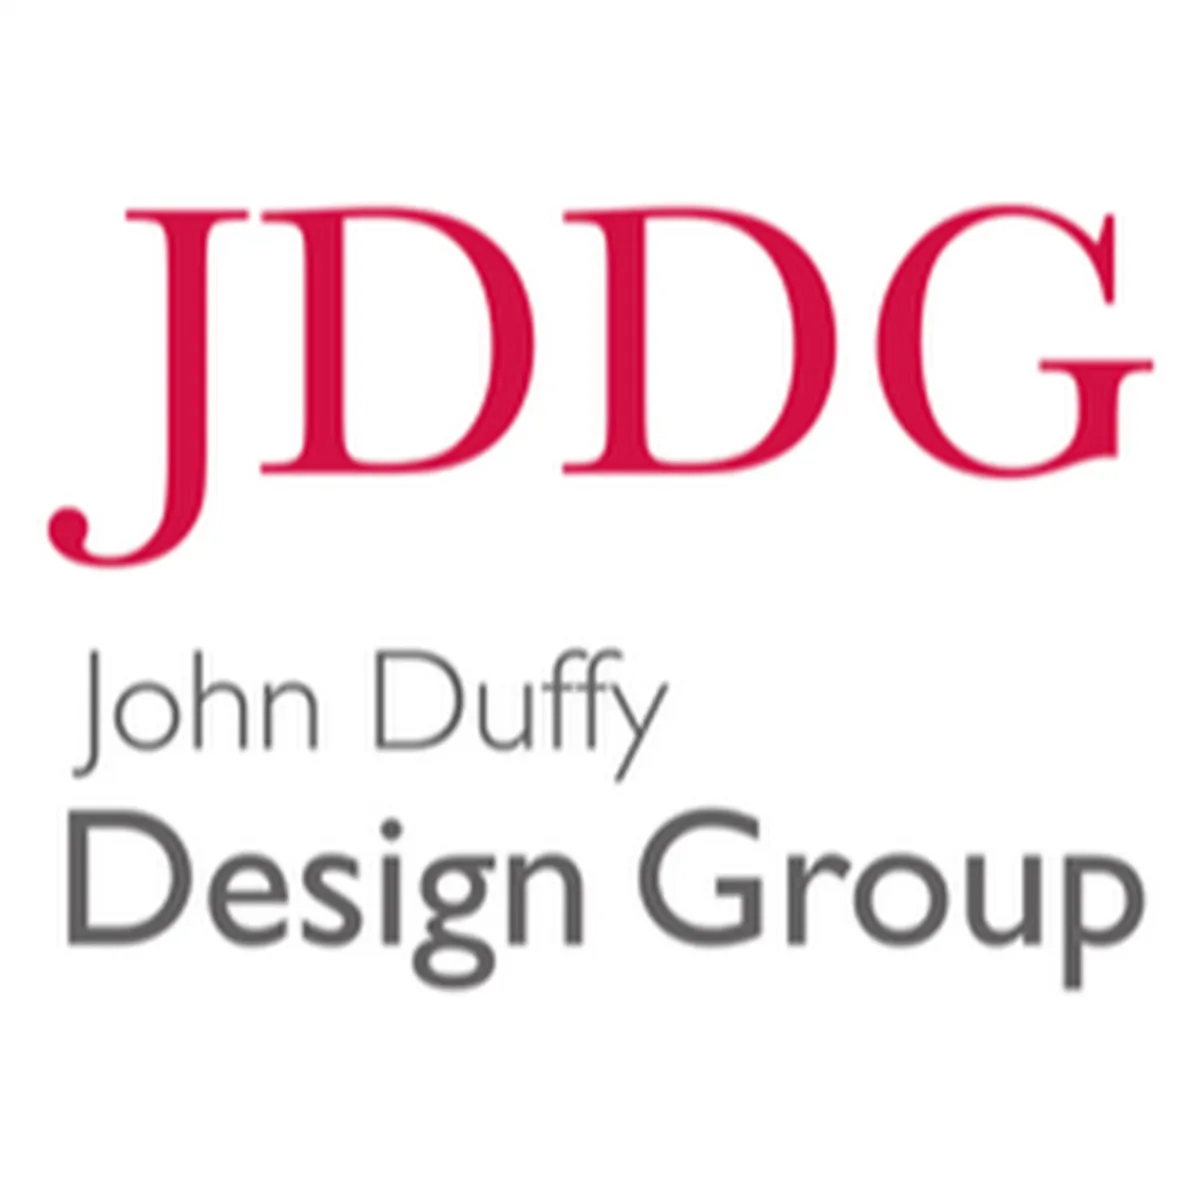 Jddg 250 Logo